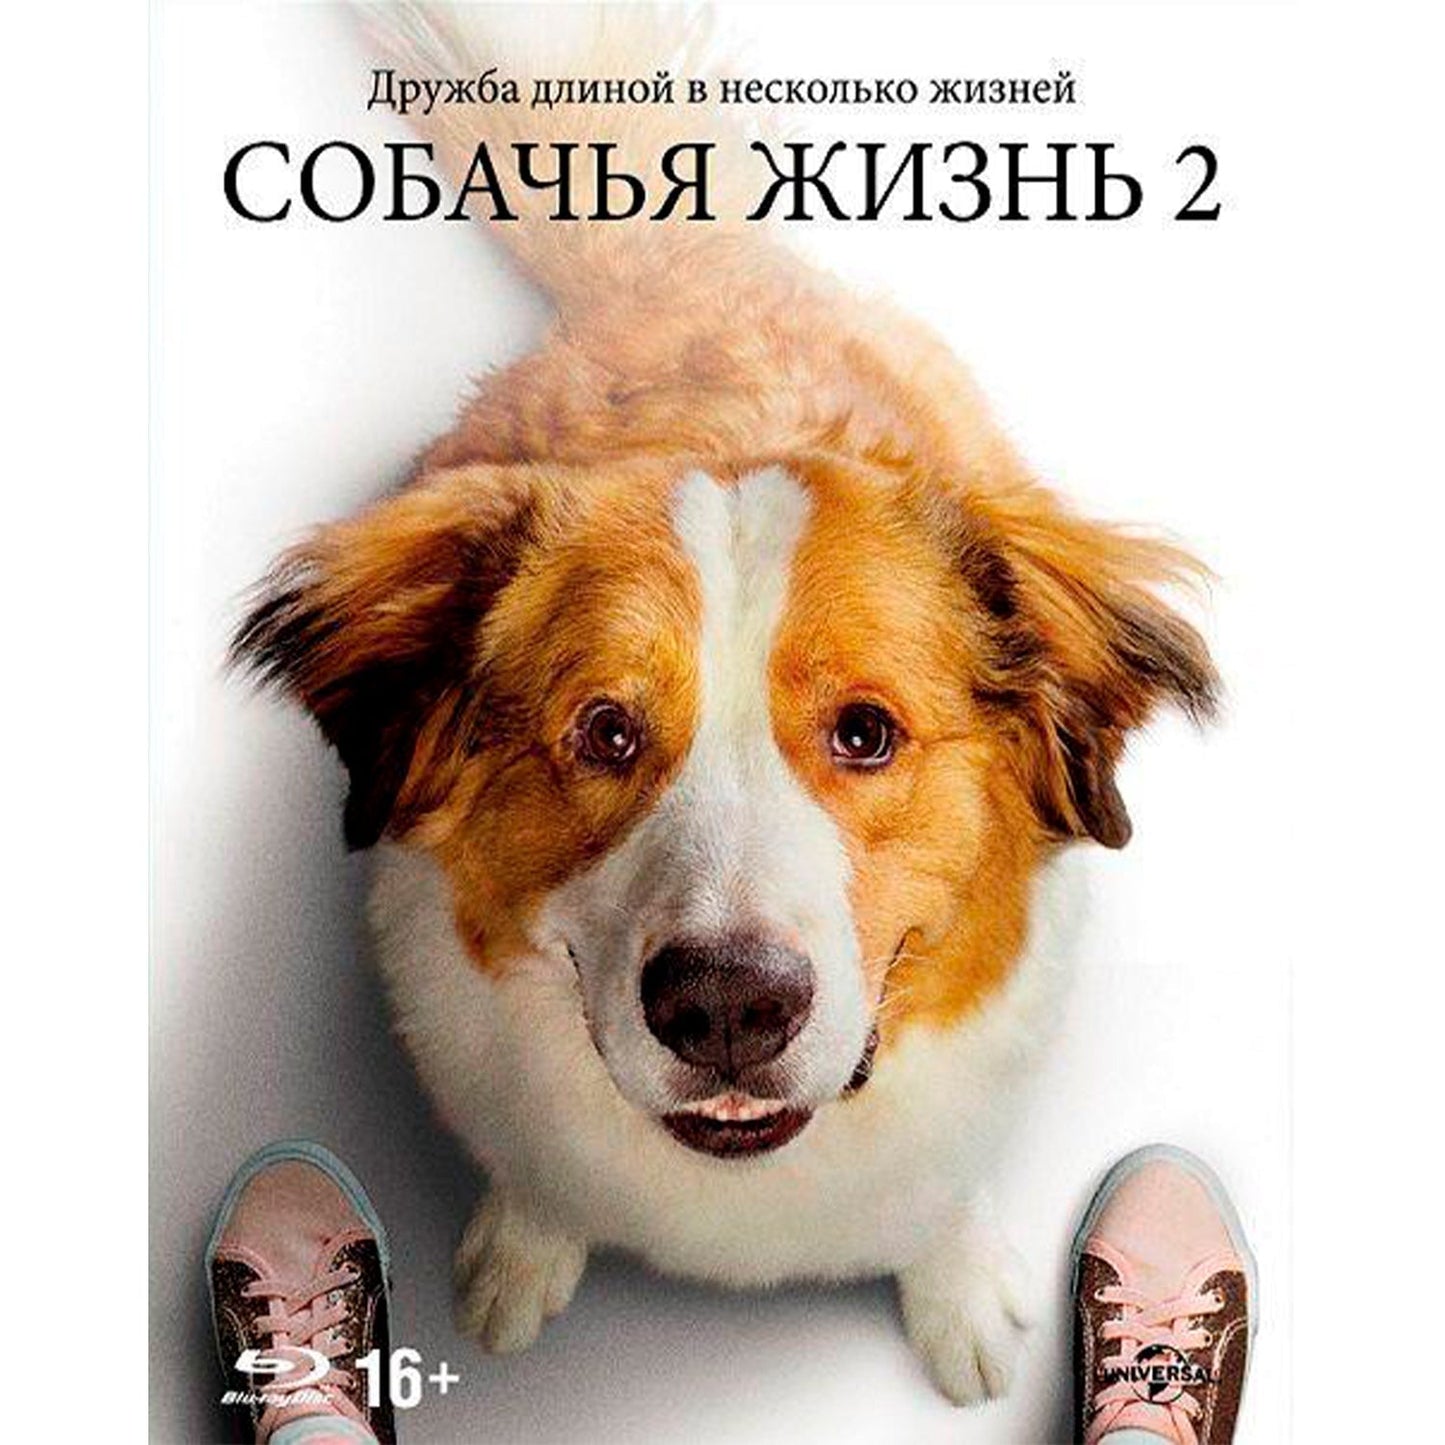 Собачья жизнь 2 (Blu-ray)